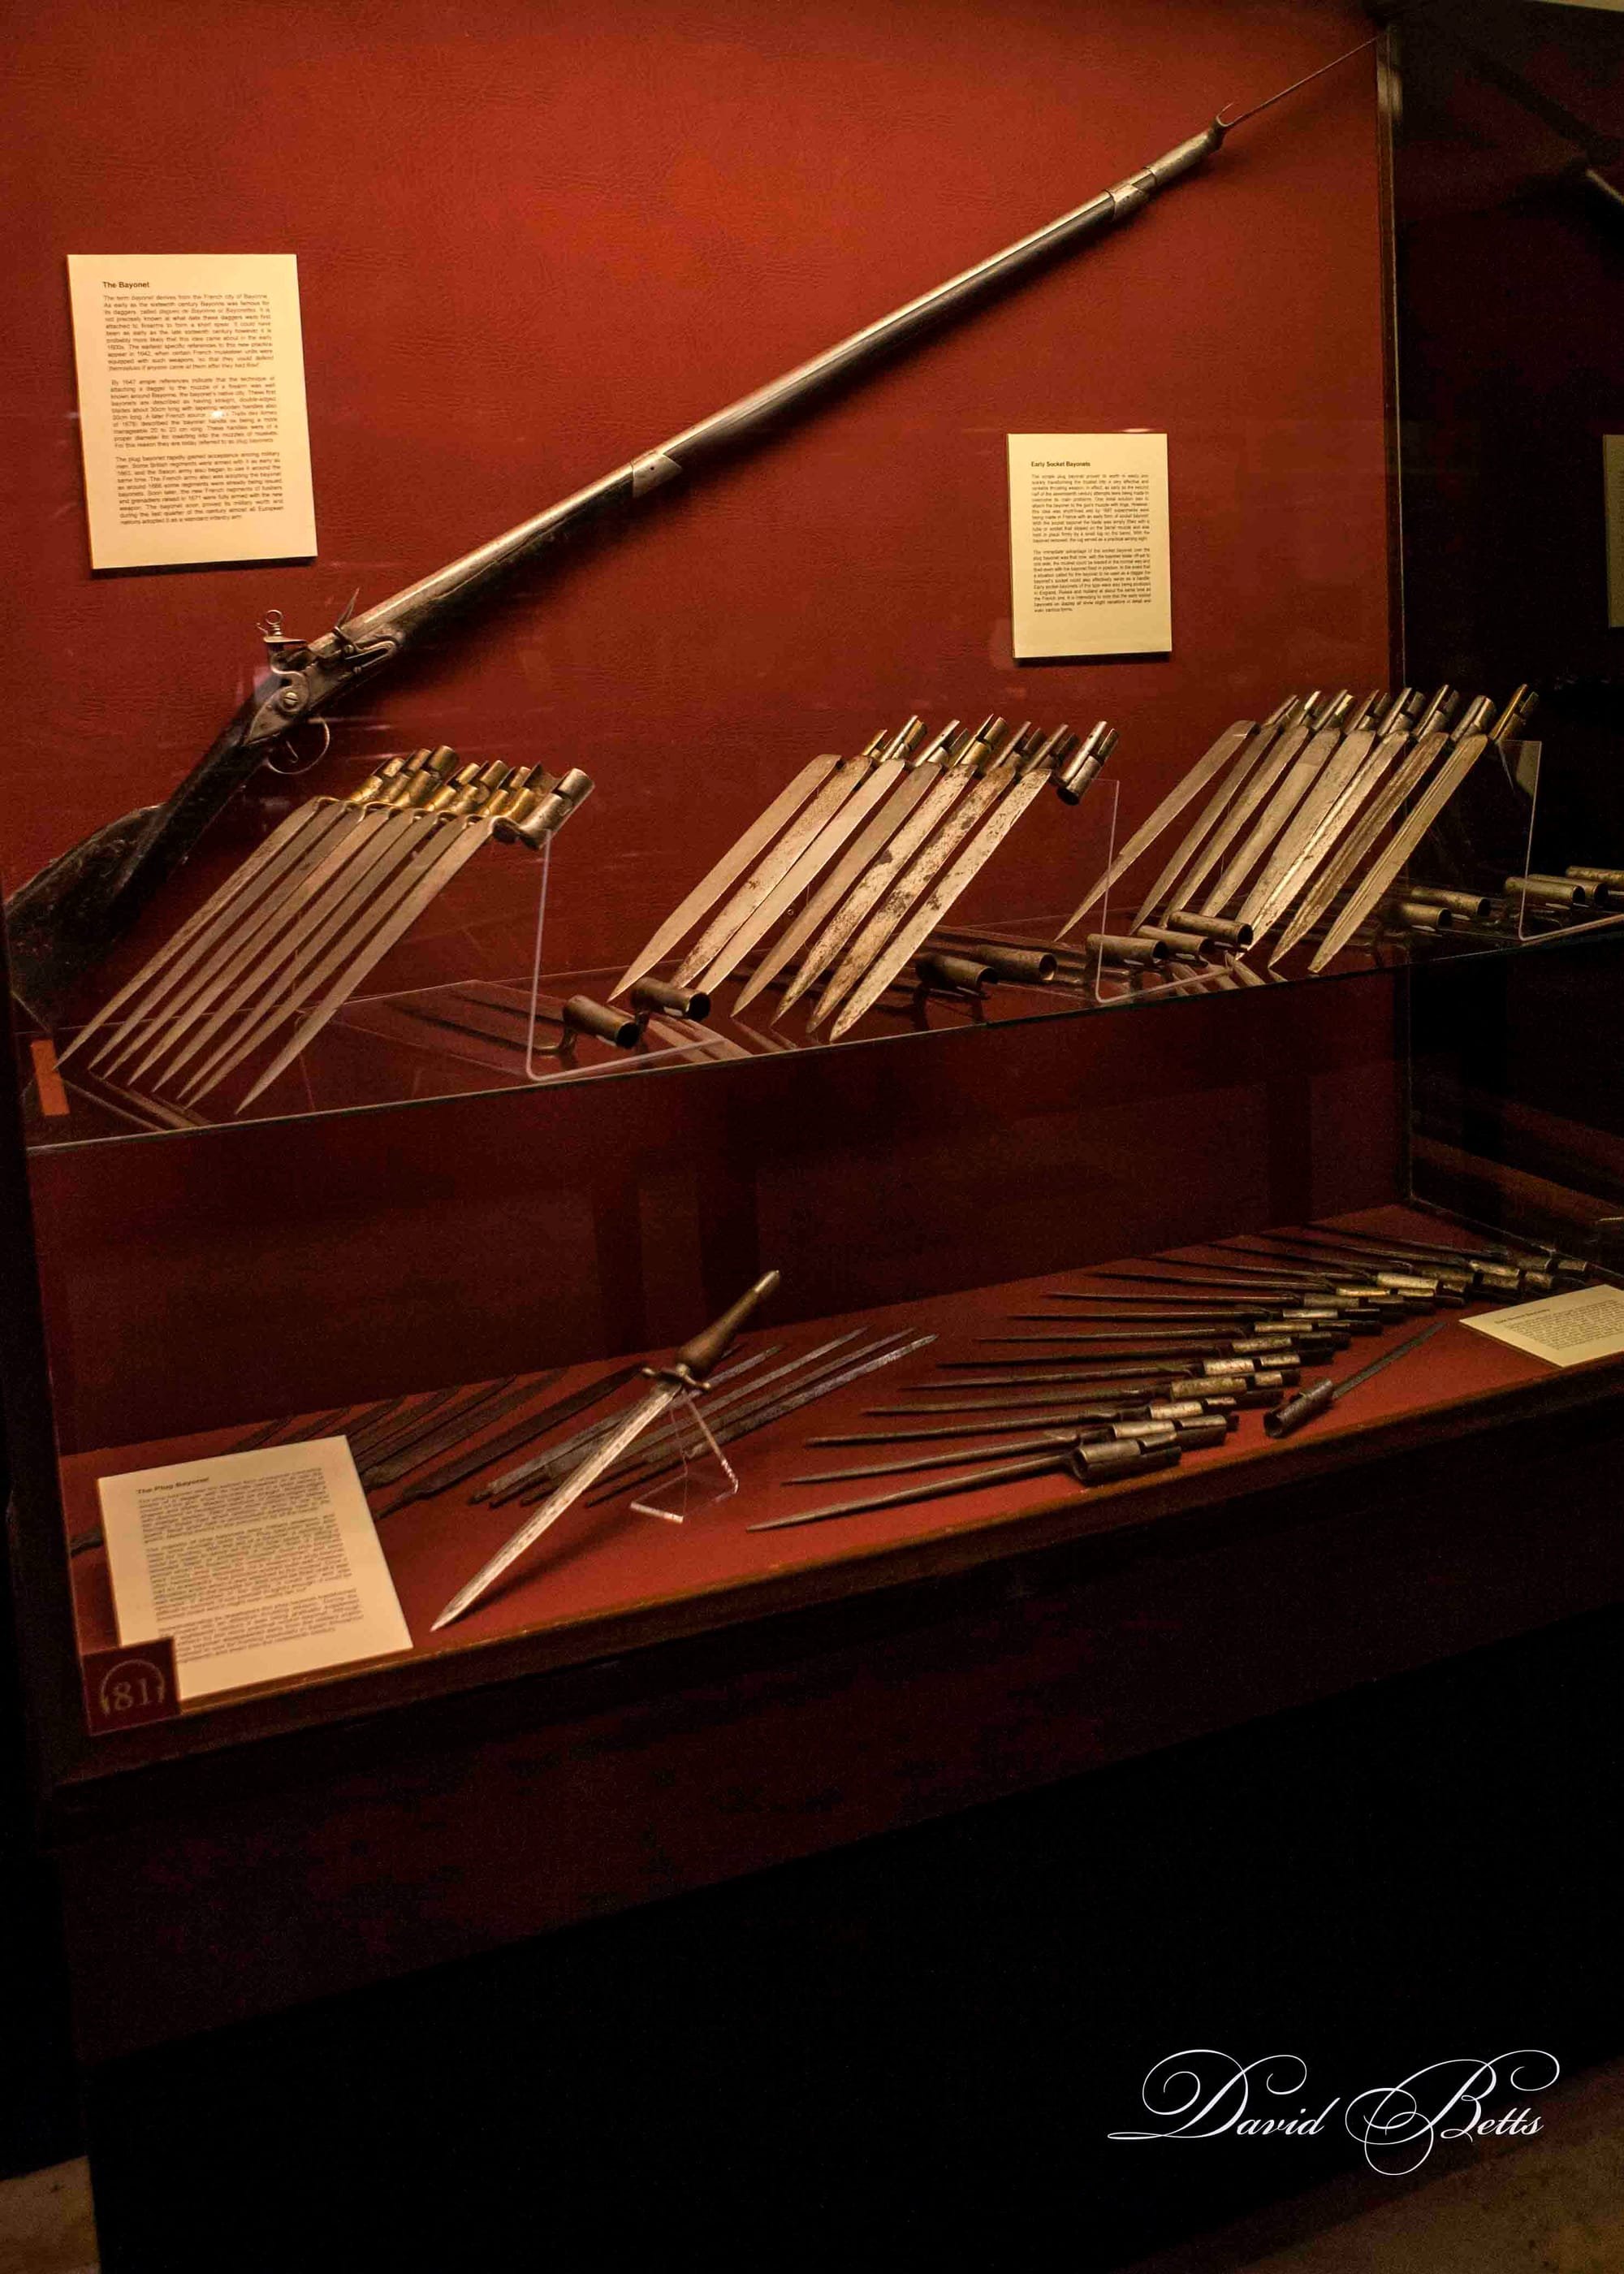 Rifles with bayonets